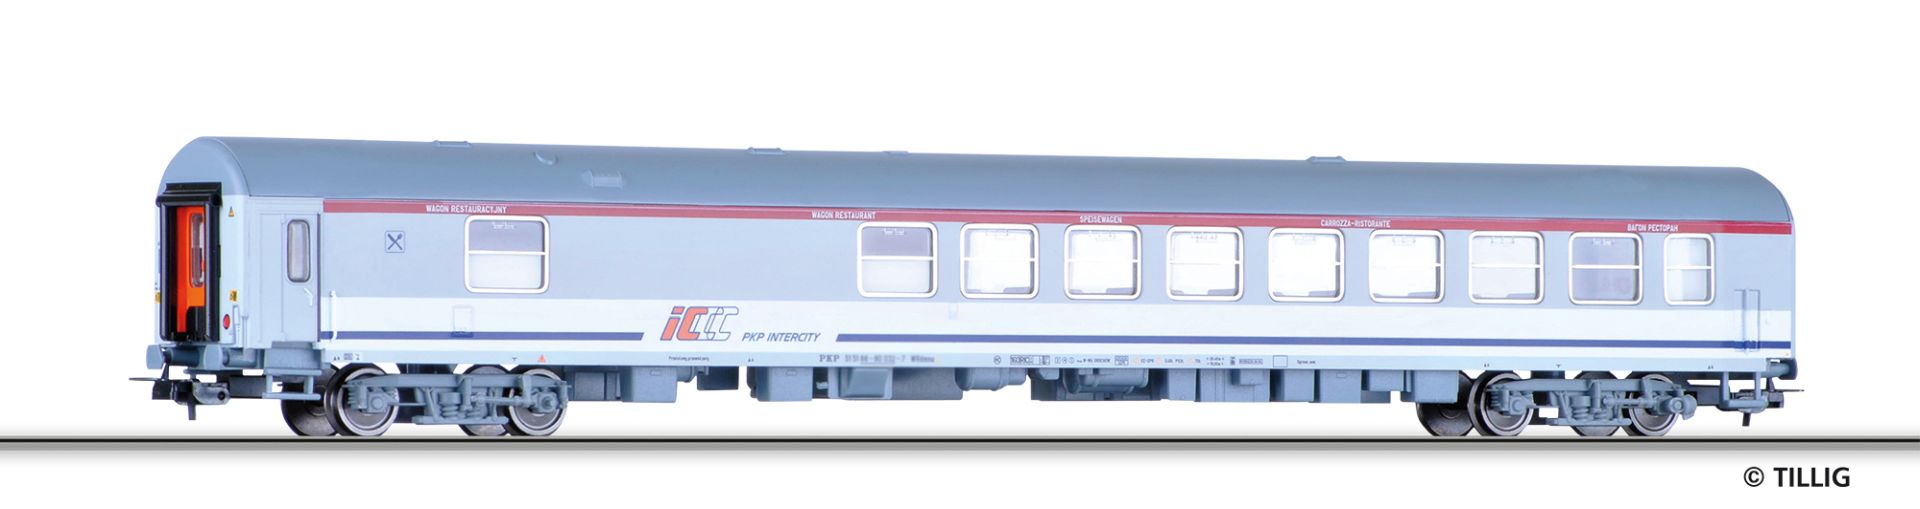 Tillig 75000 - Speisewagen WRdmu, PKP-Intercity, Ep.VI